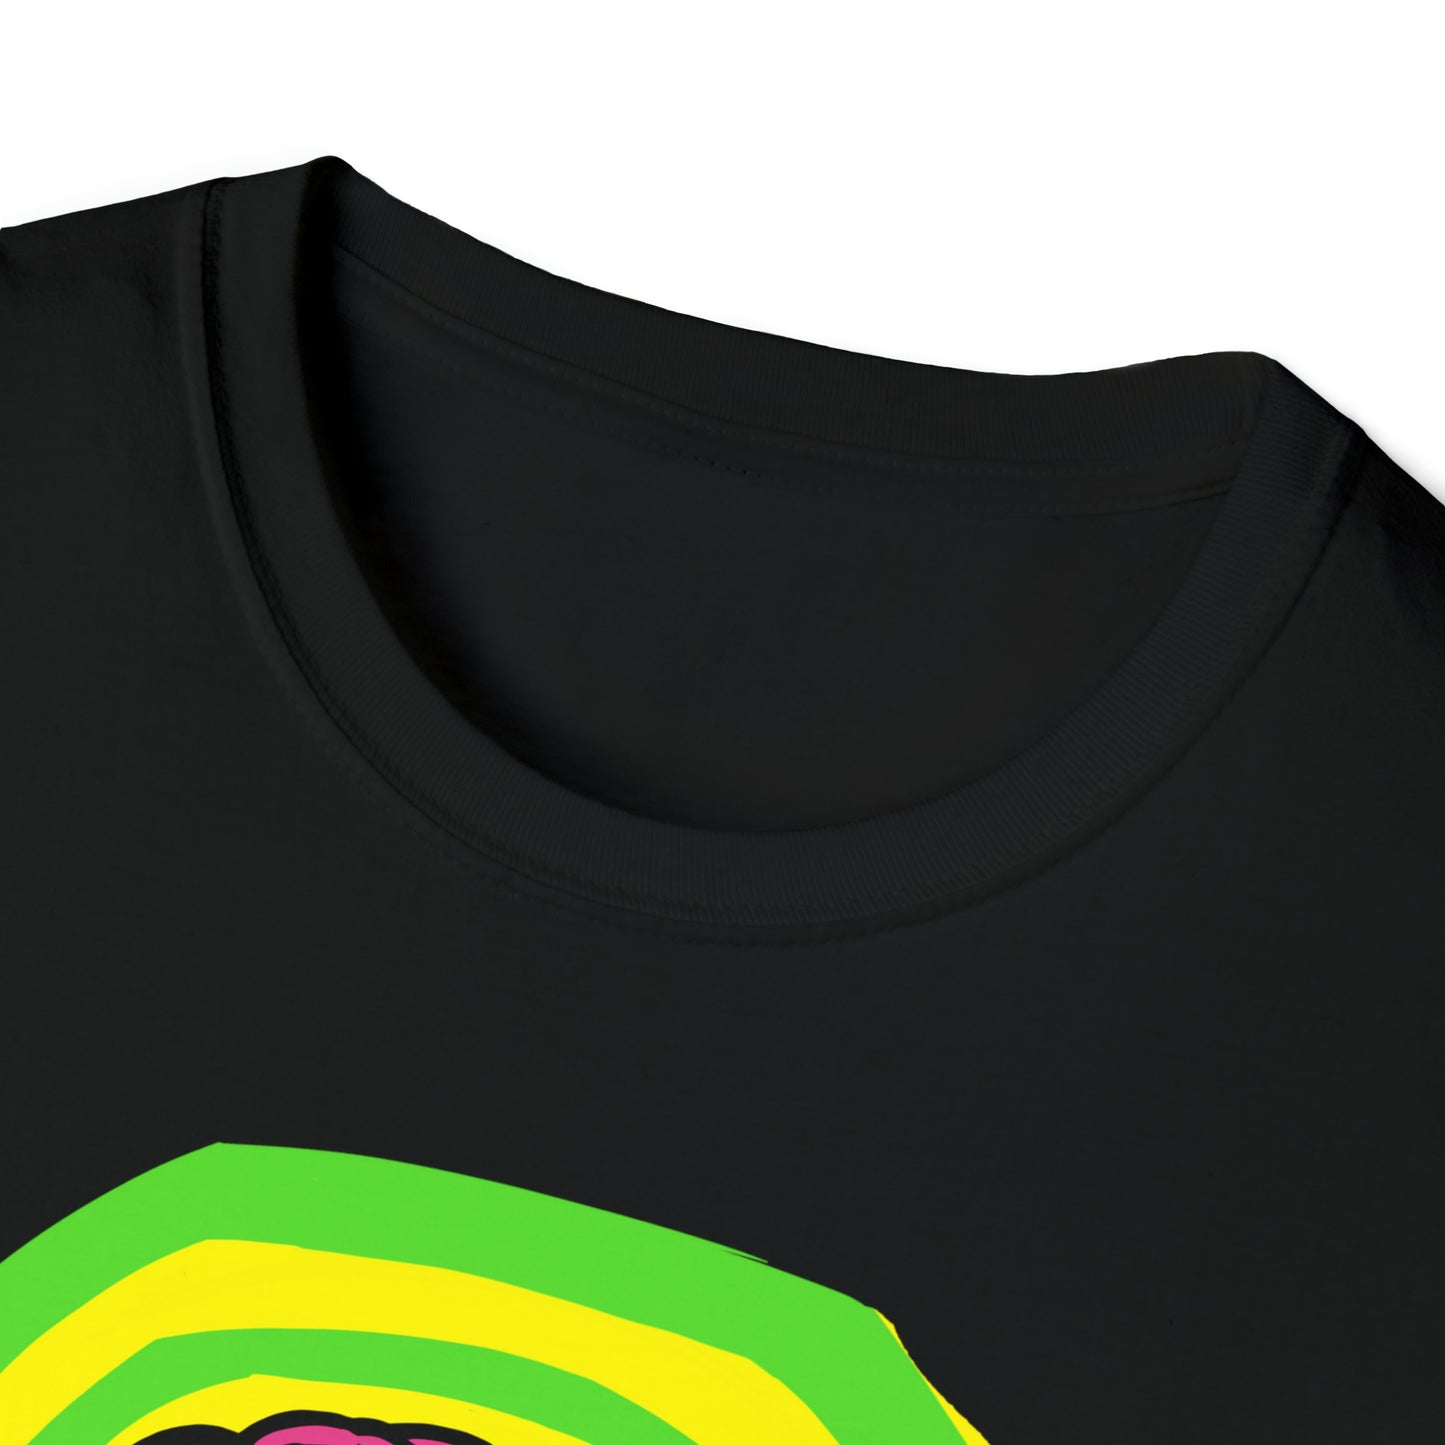 Dr. Evil Mind Control - Unisex Softstyle T-Shirt